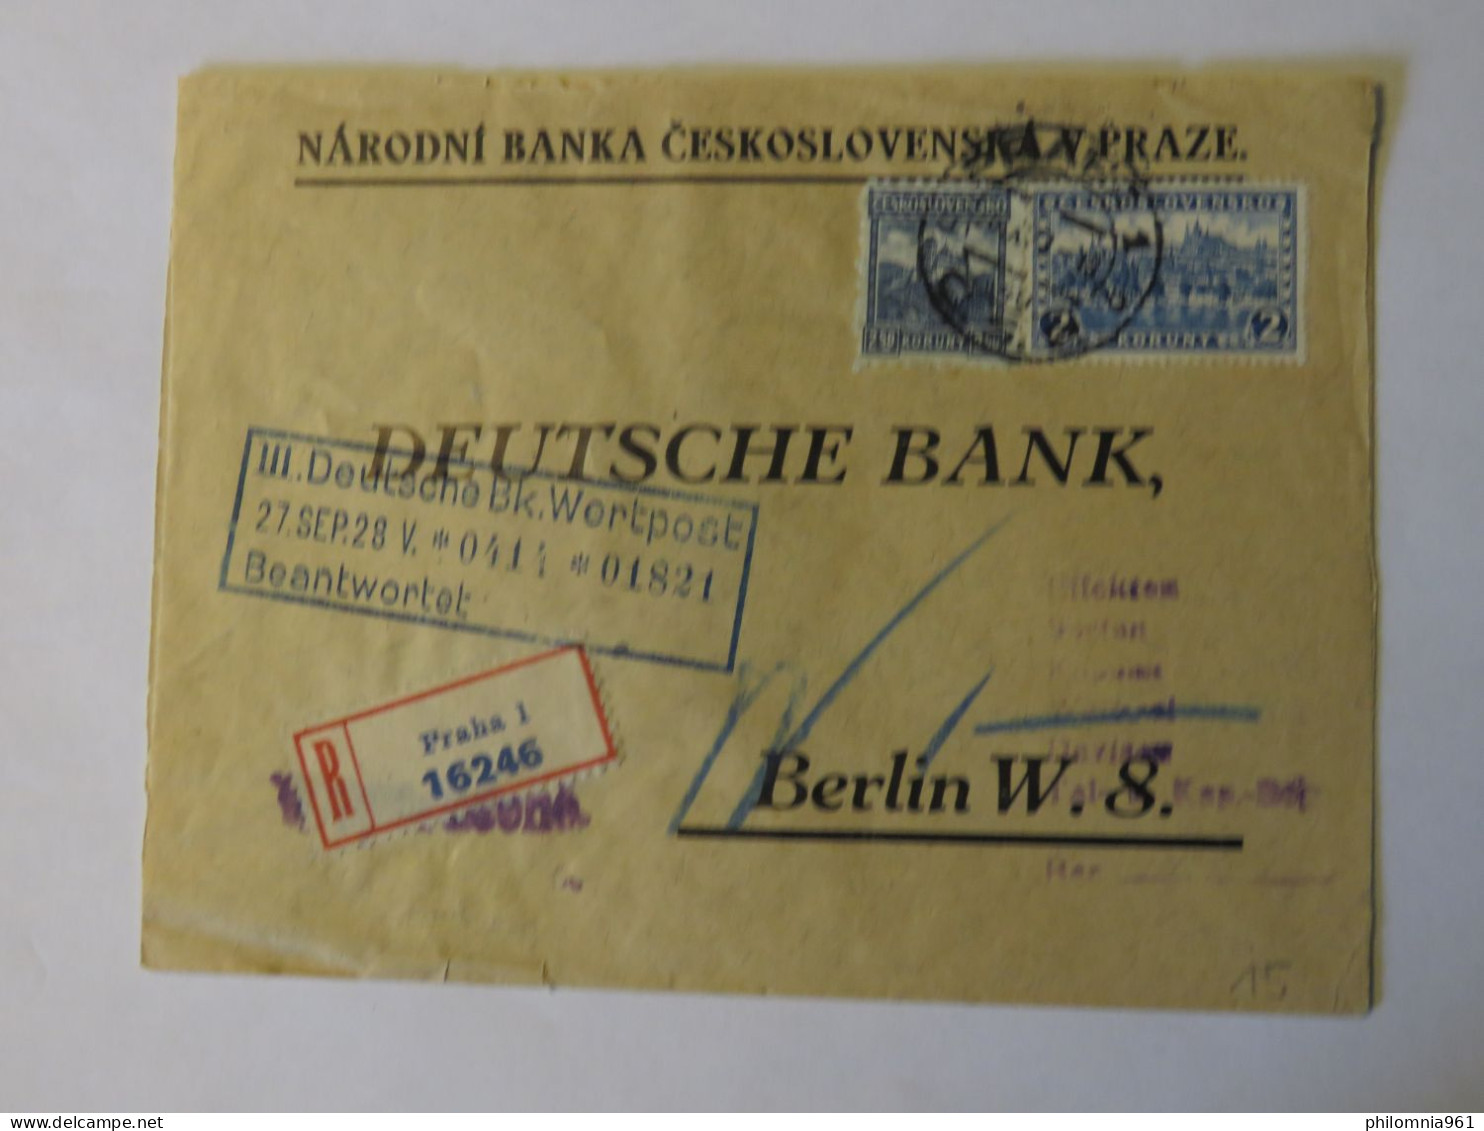 CZECHOSLOVAKIA REGISTERED COVER TO GERMANY 1928 - Gebraucht